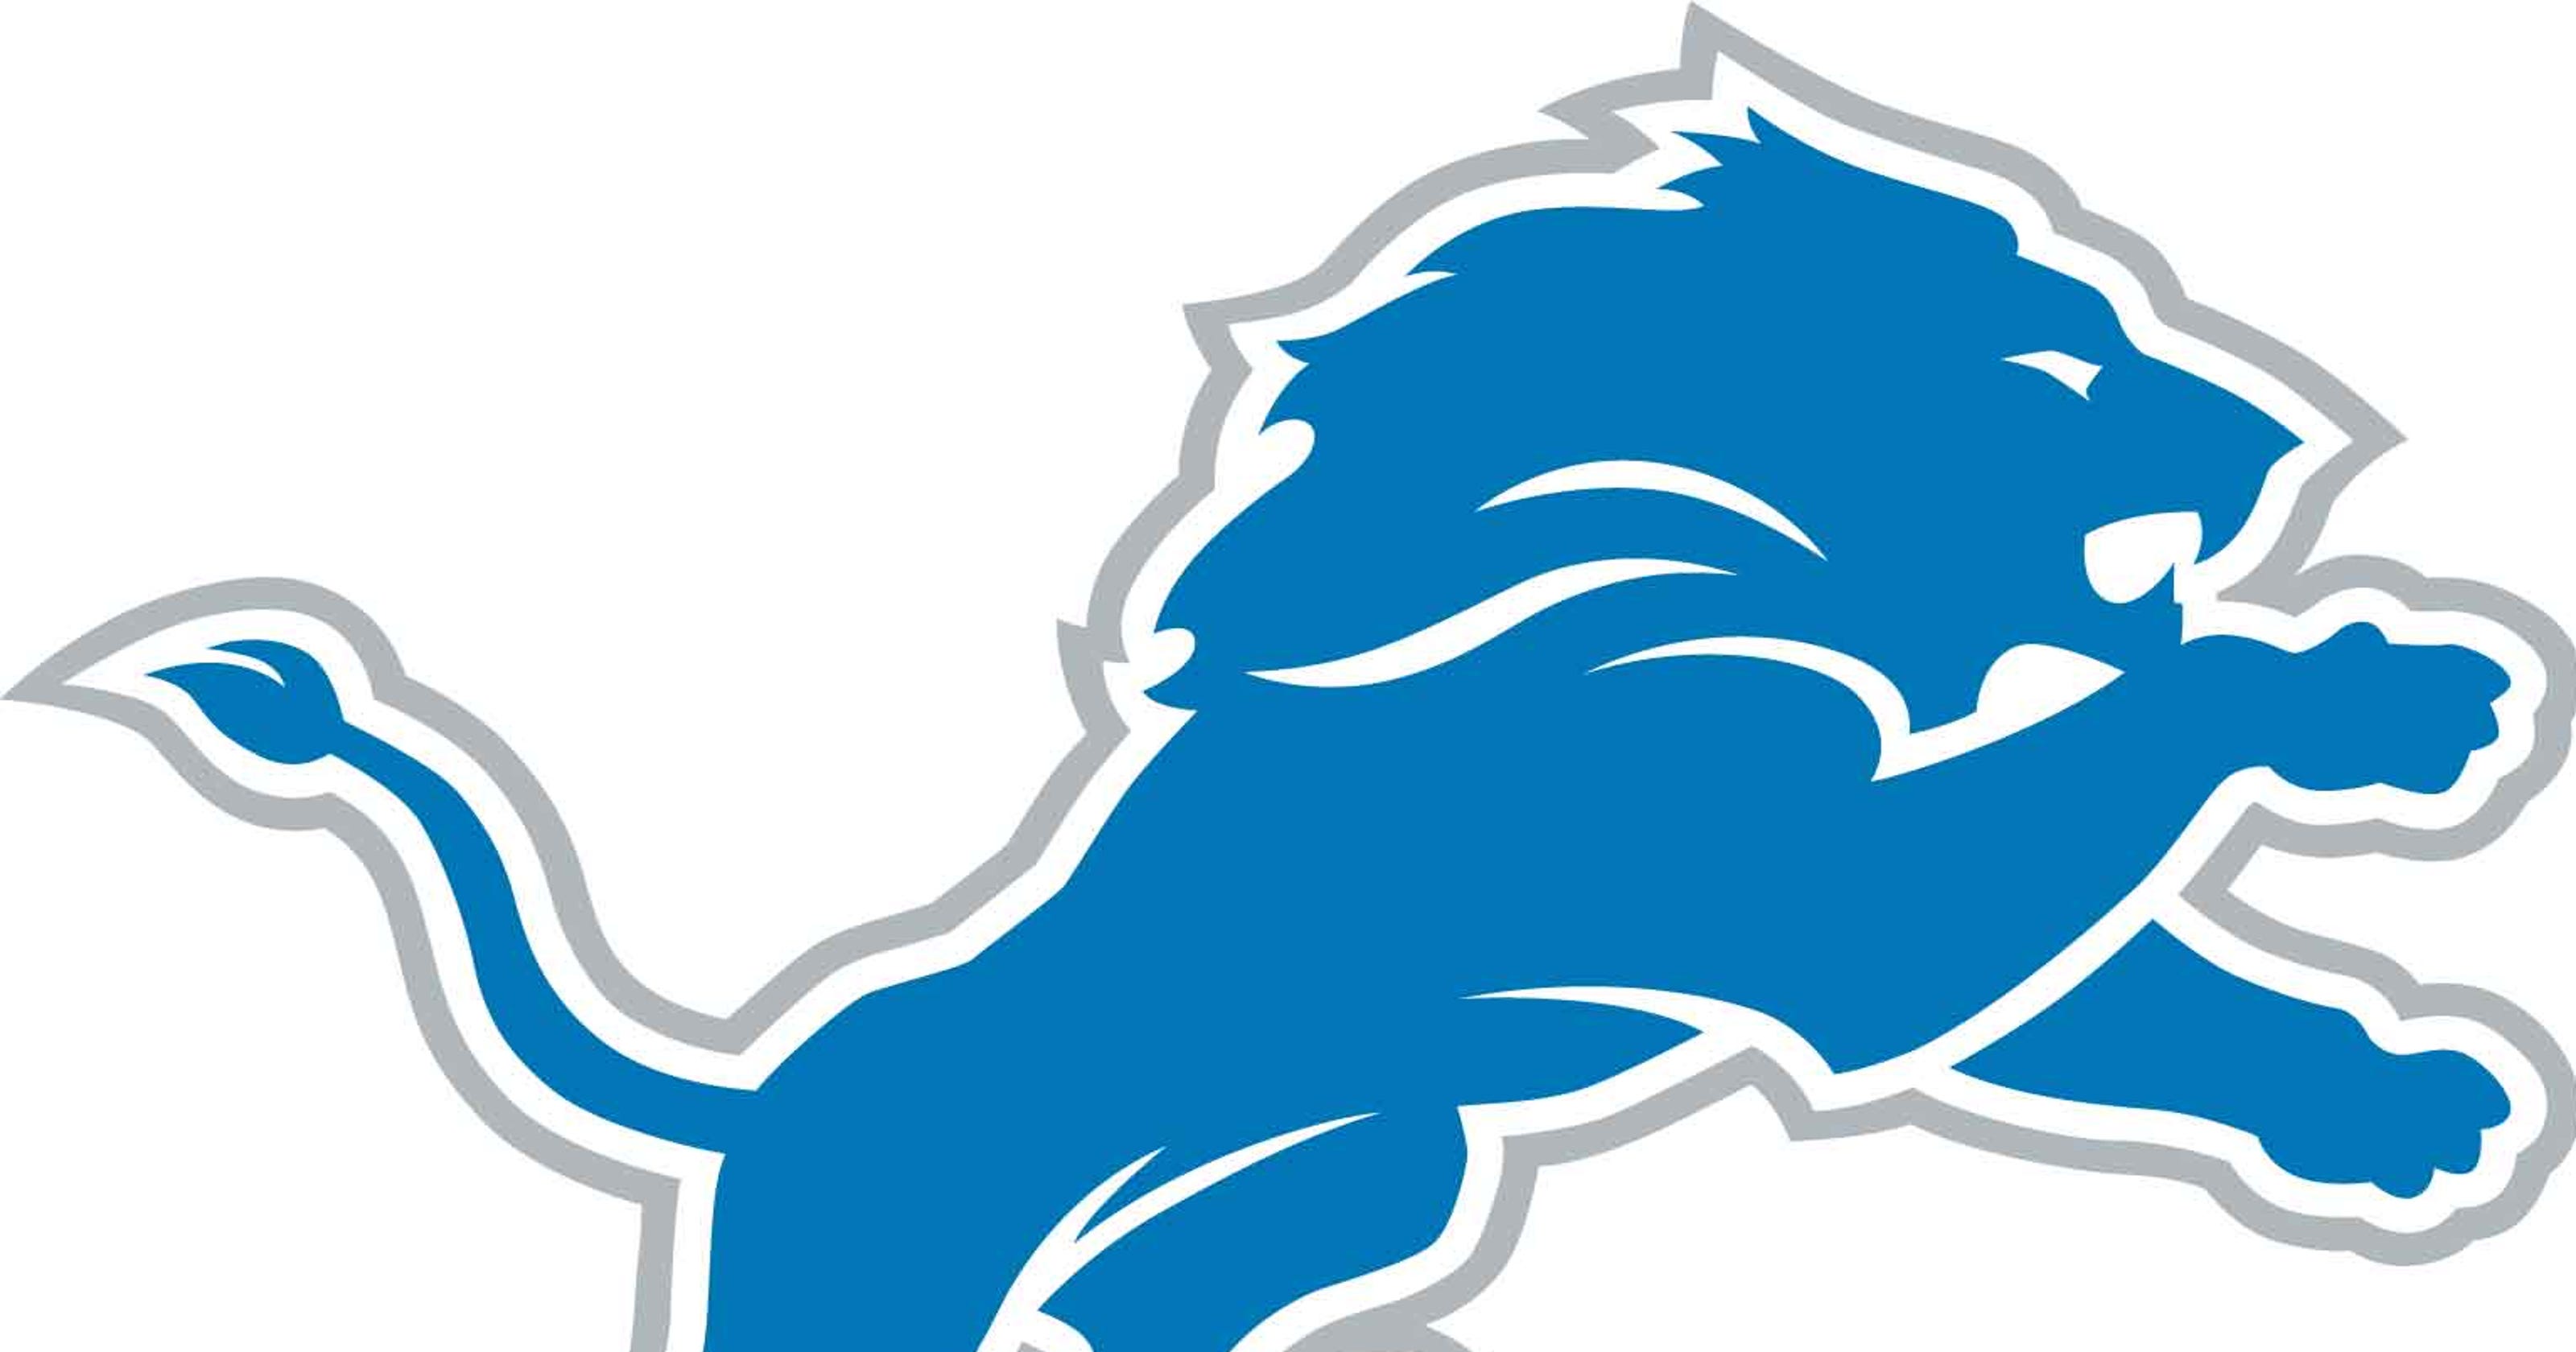 Detroit Lions Printable Logo